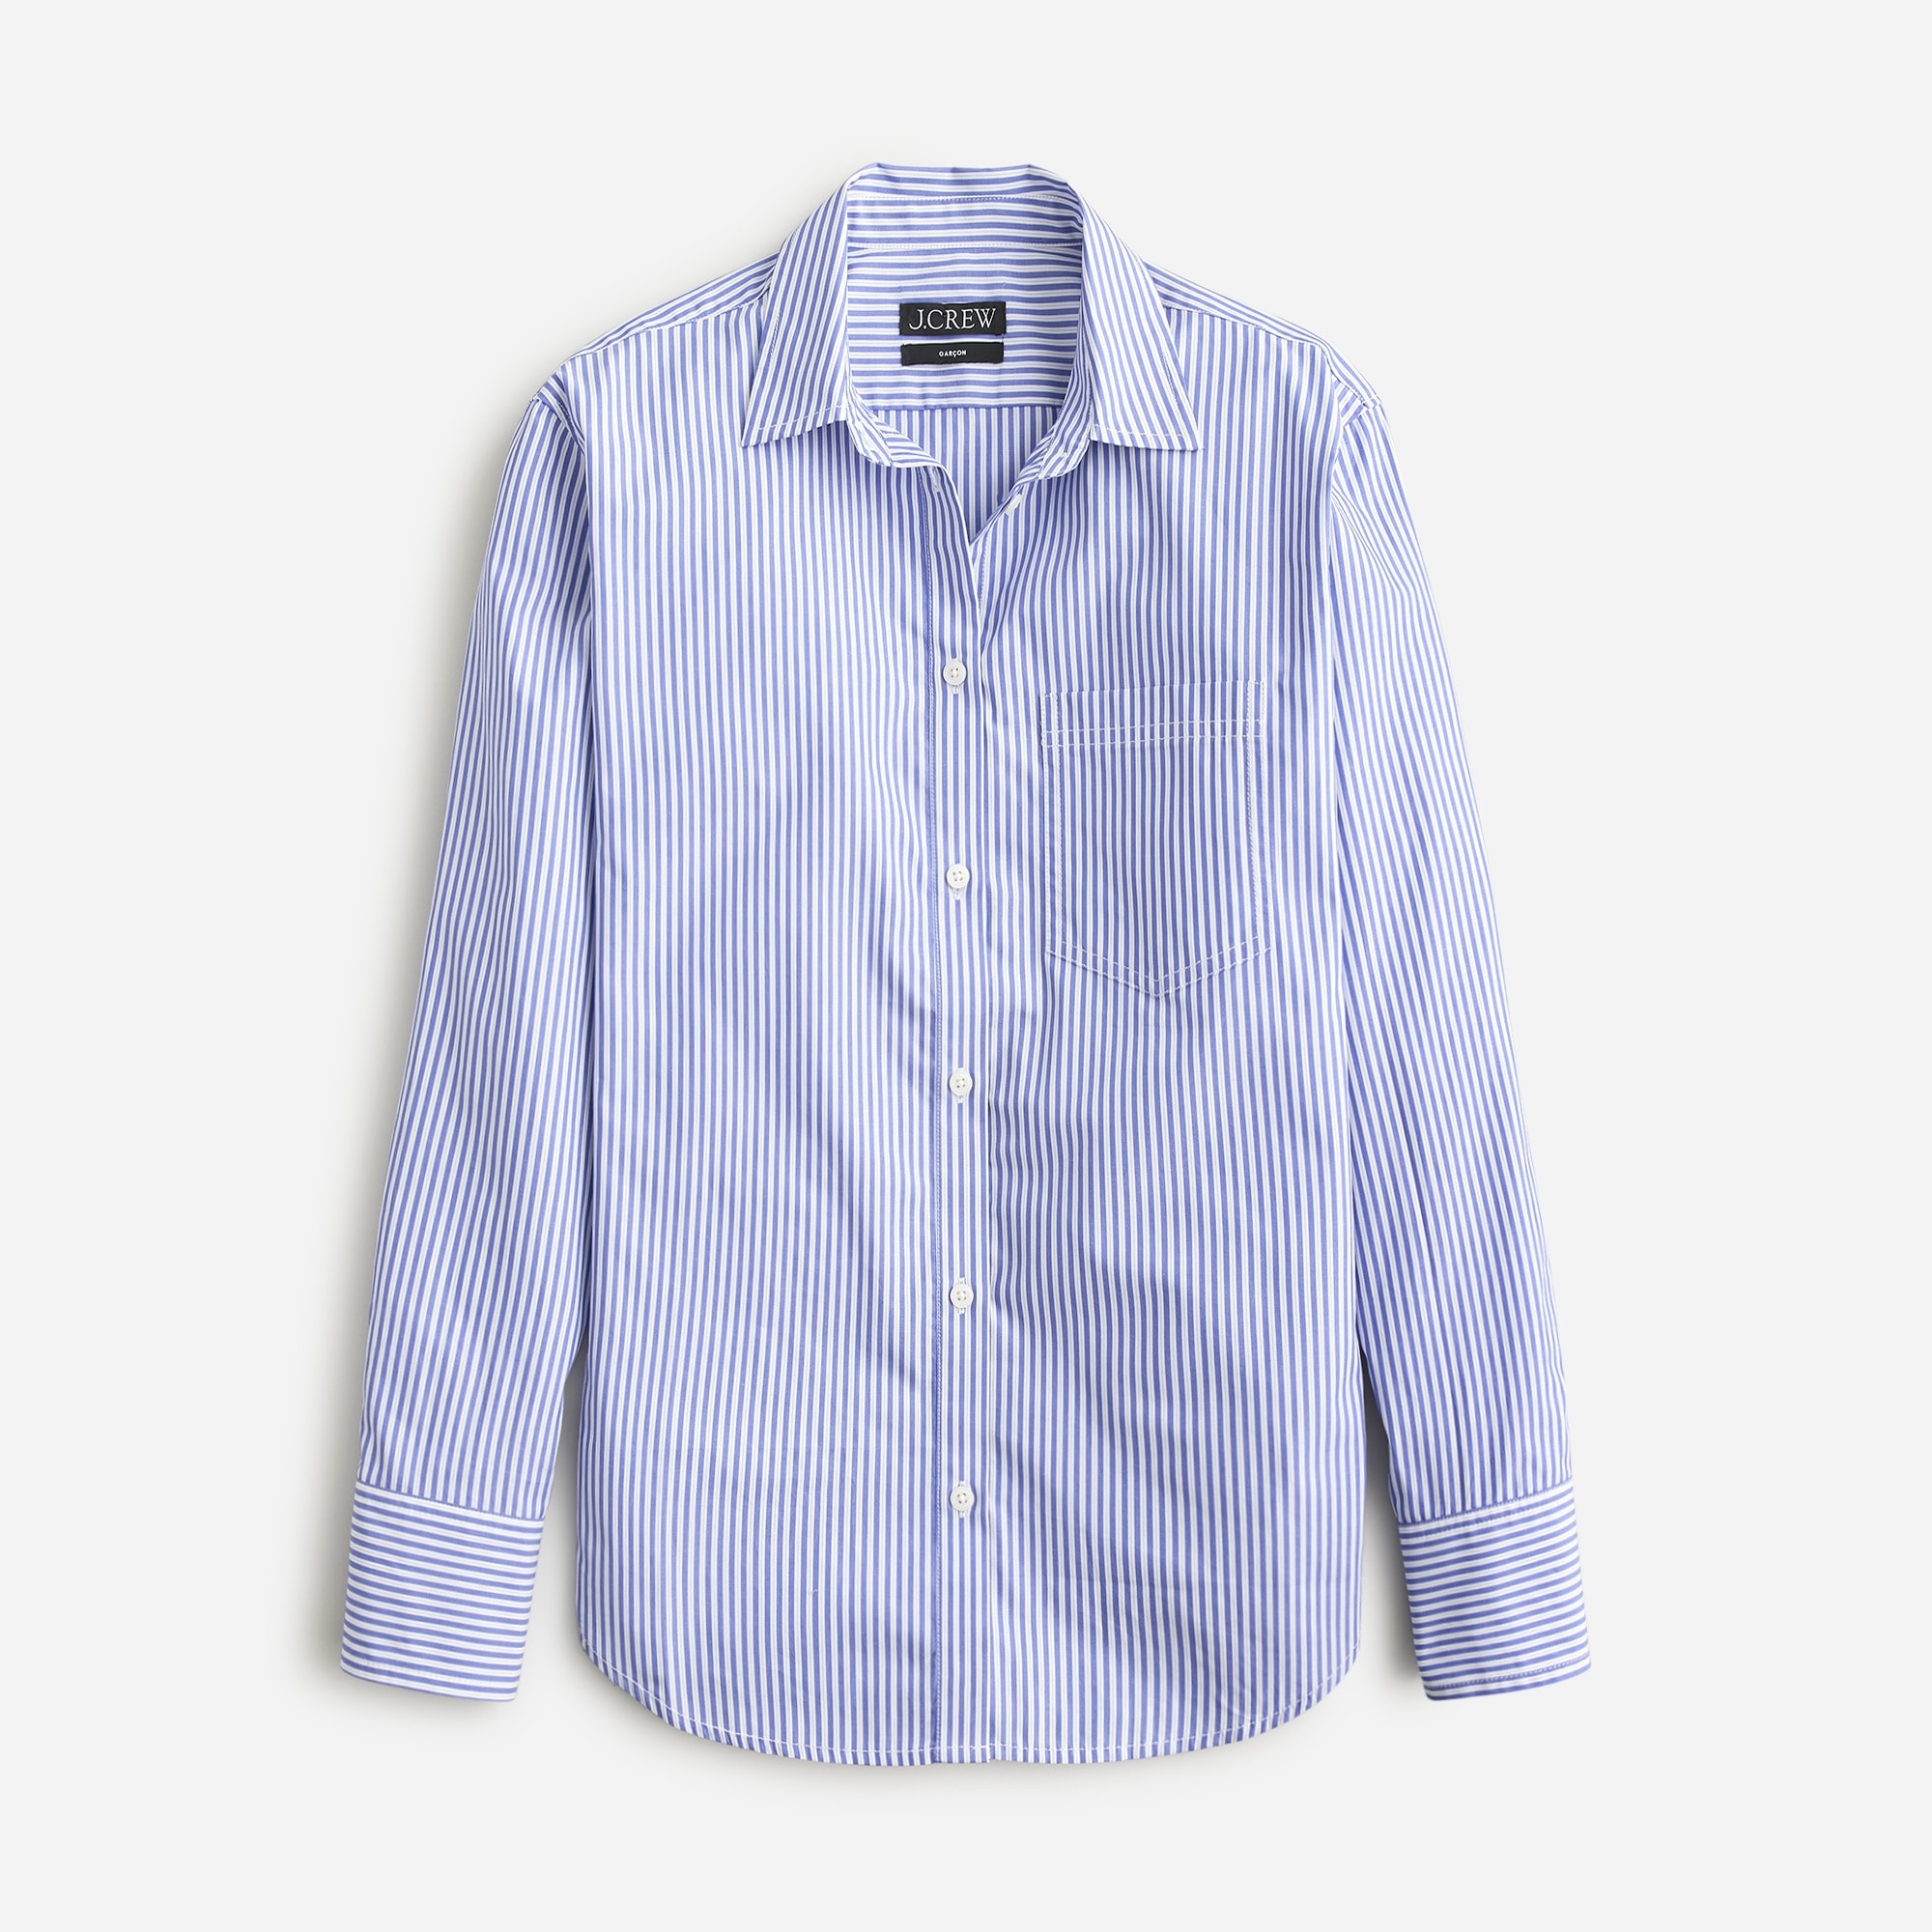 Garçon classic shirt in stripe cotton poplin